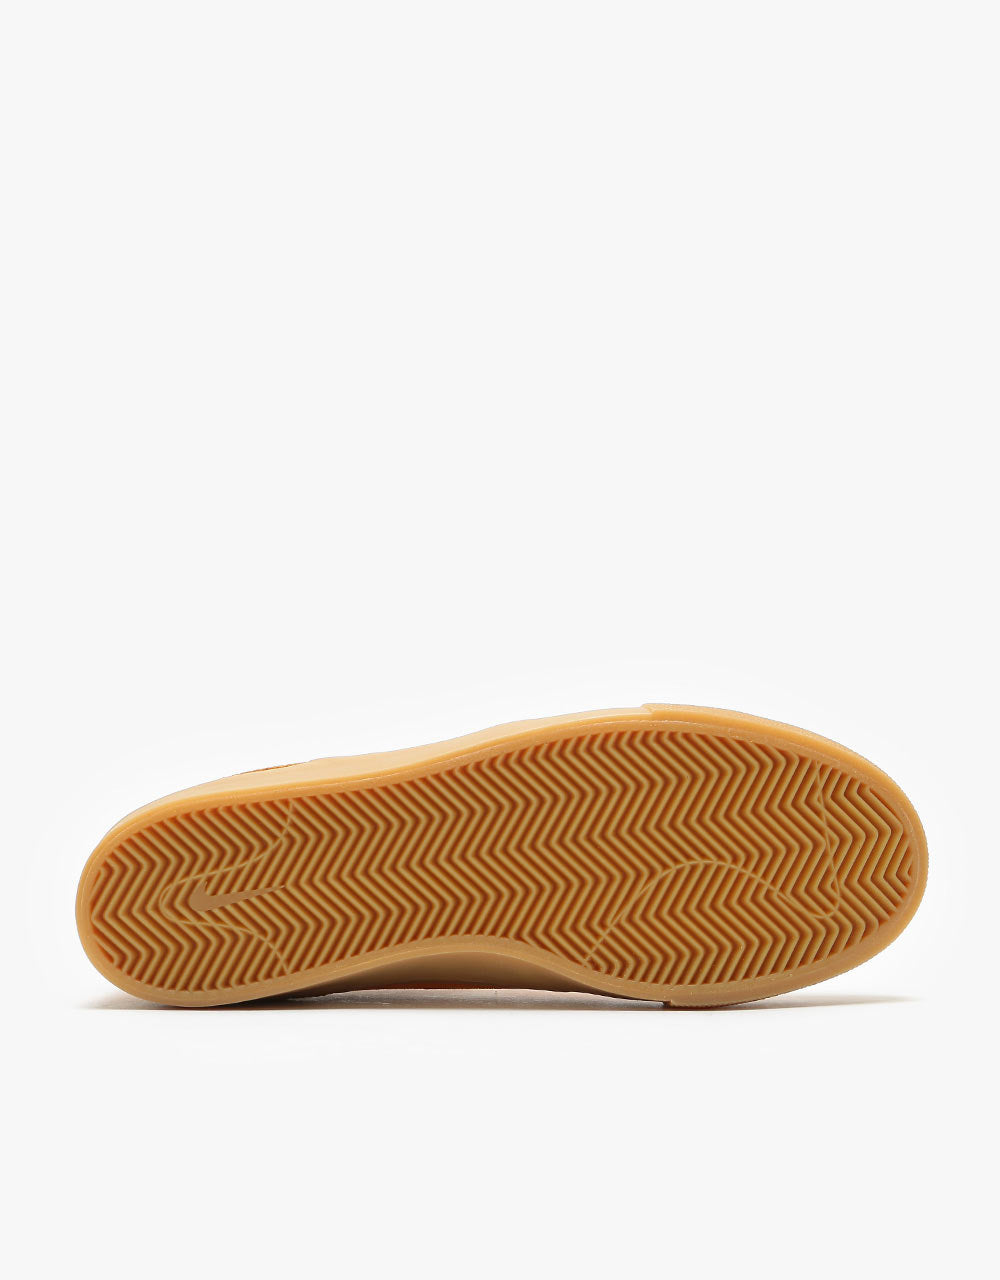 Nike SB Zoom Stefan Janoski RM Skate Shoes - Chutney/Sail-Chutney-Gum Light Brown